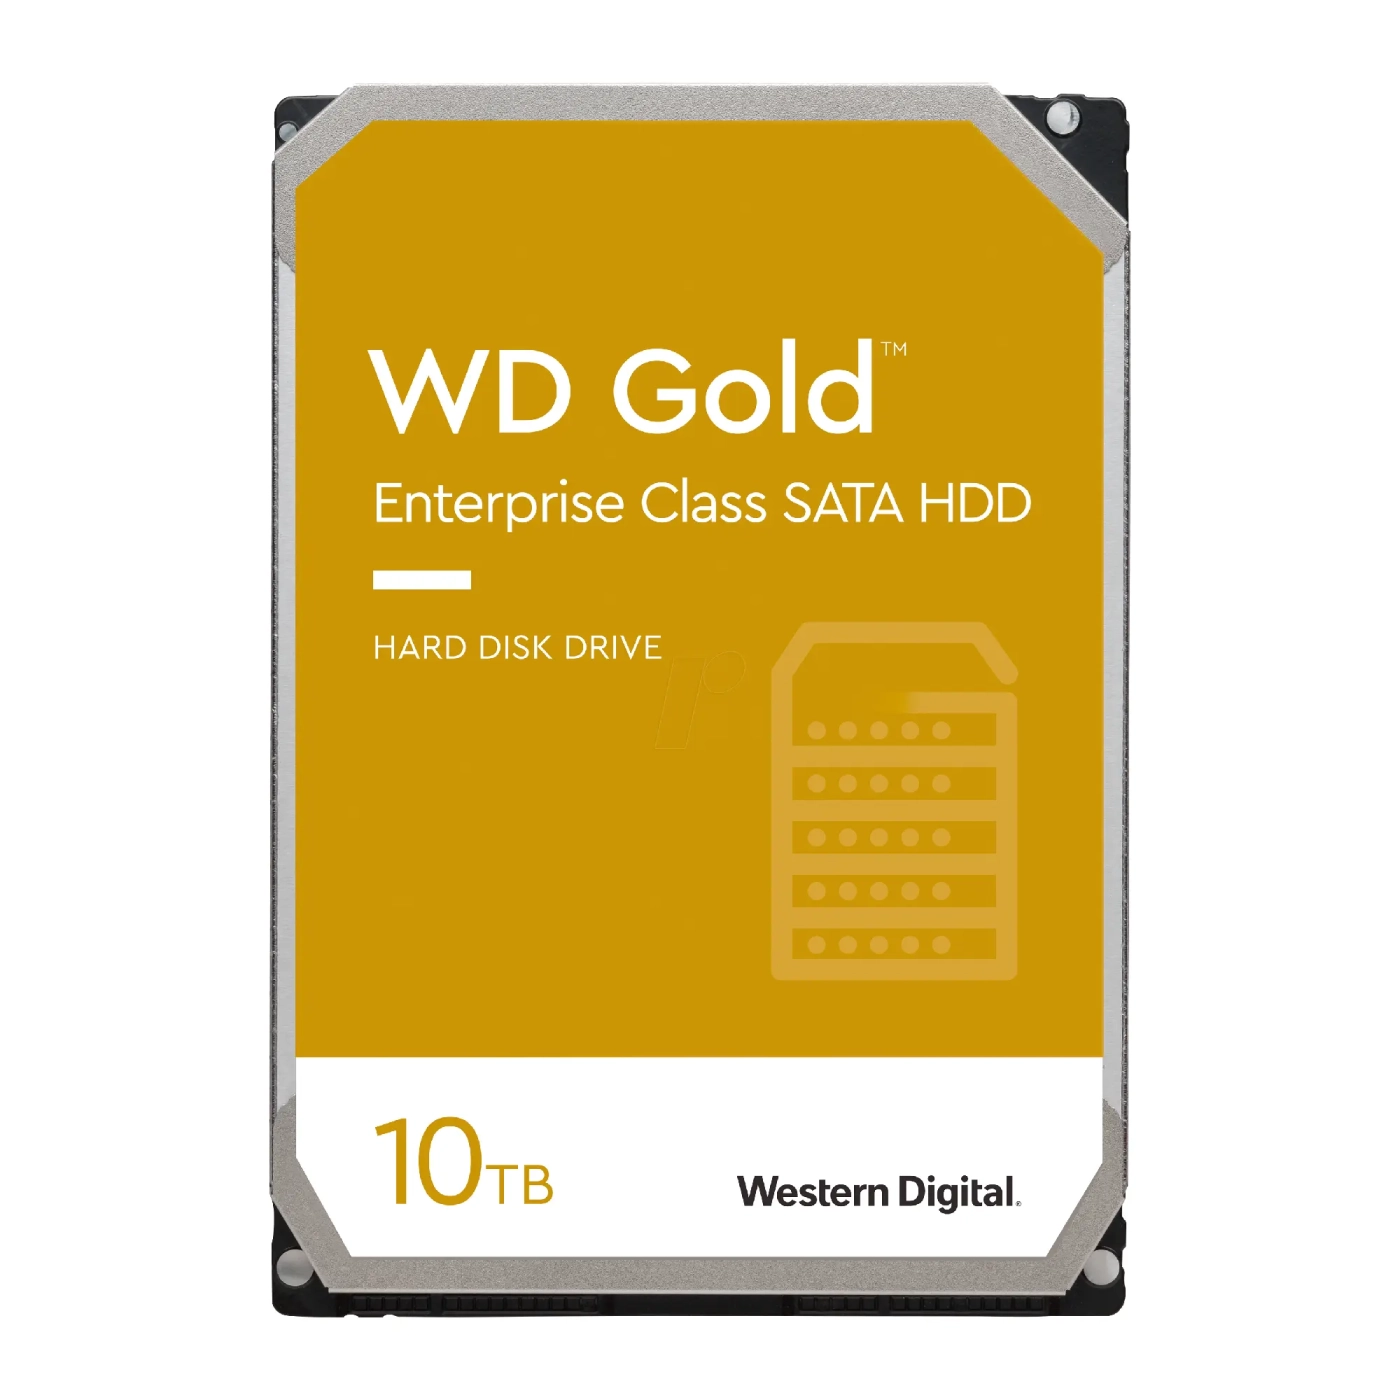 Купить Жесткий диск WD Gold Enterprise Class 10TB 7200rpm 256MB 3.5' SATA III (WD102KRYZ) - фото 2